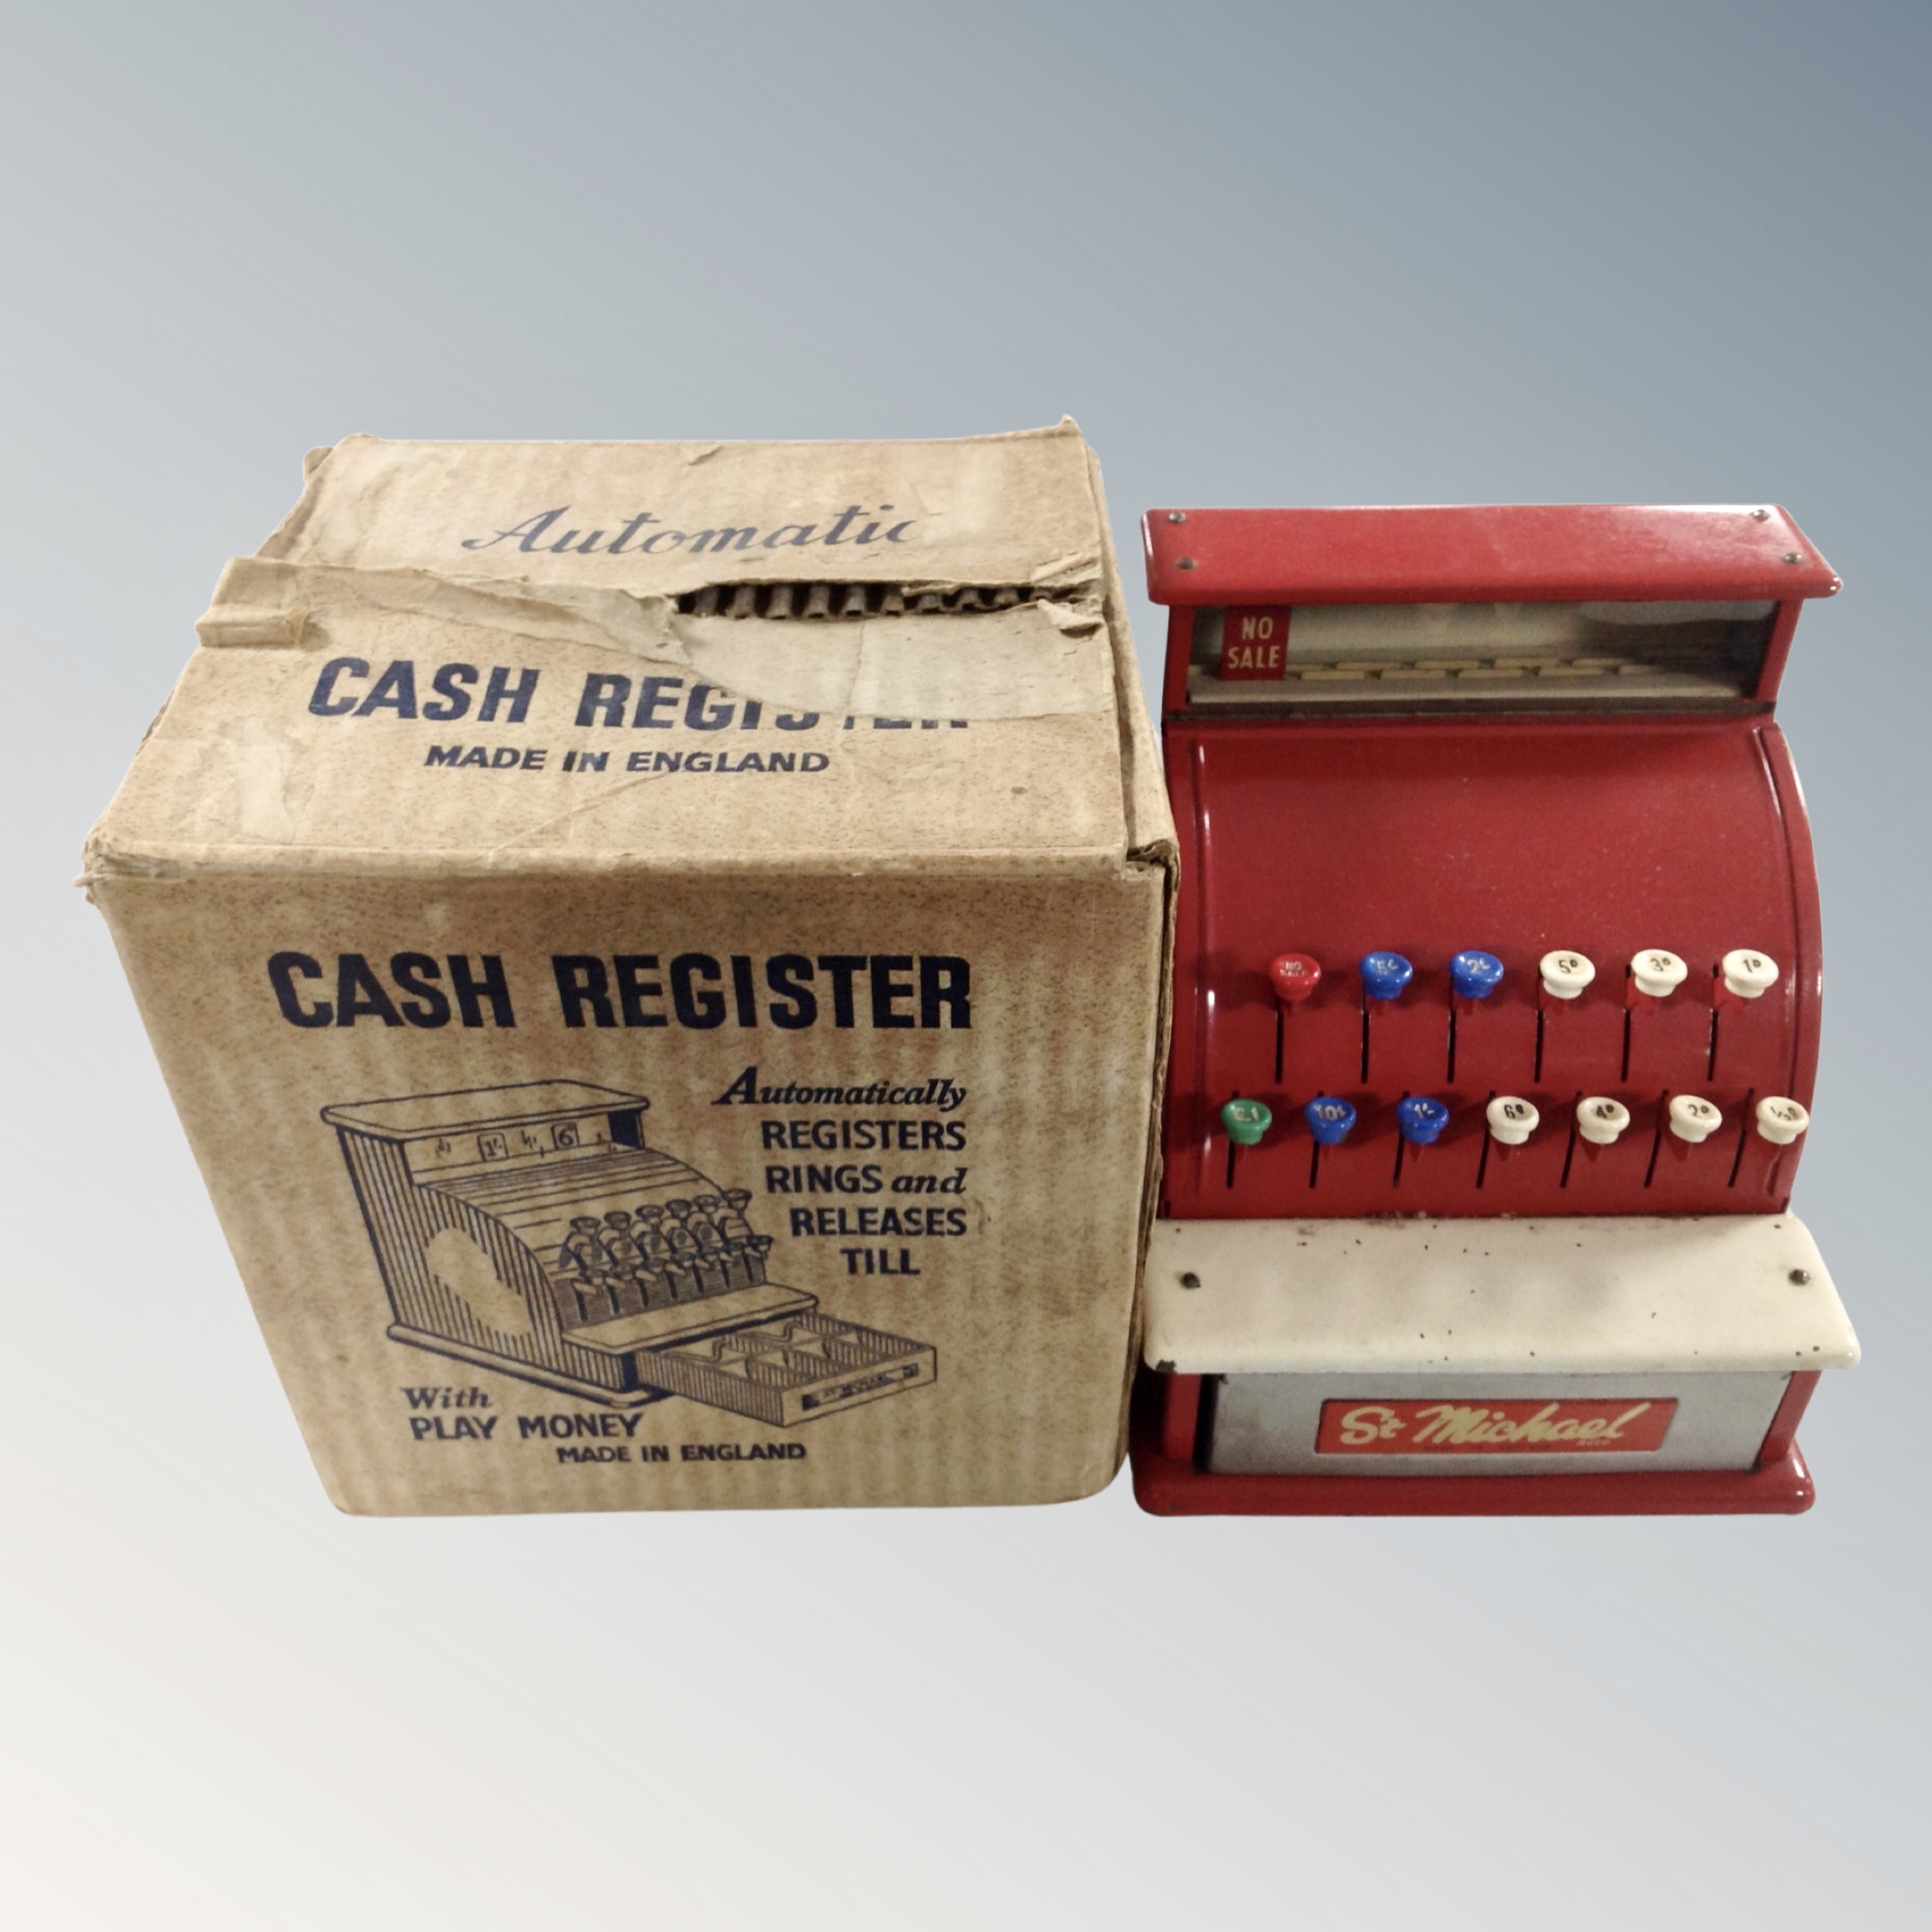 A vintage child's St Michael enameled cash register in original box.